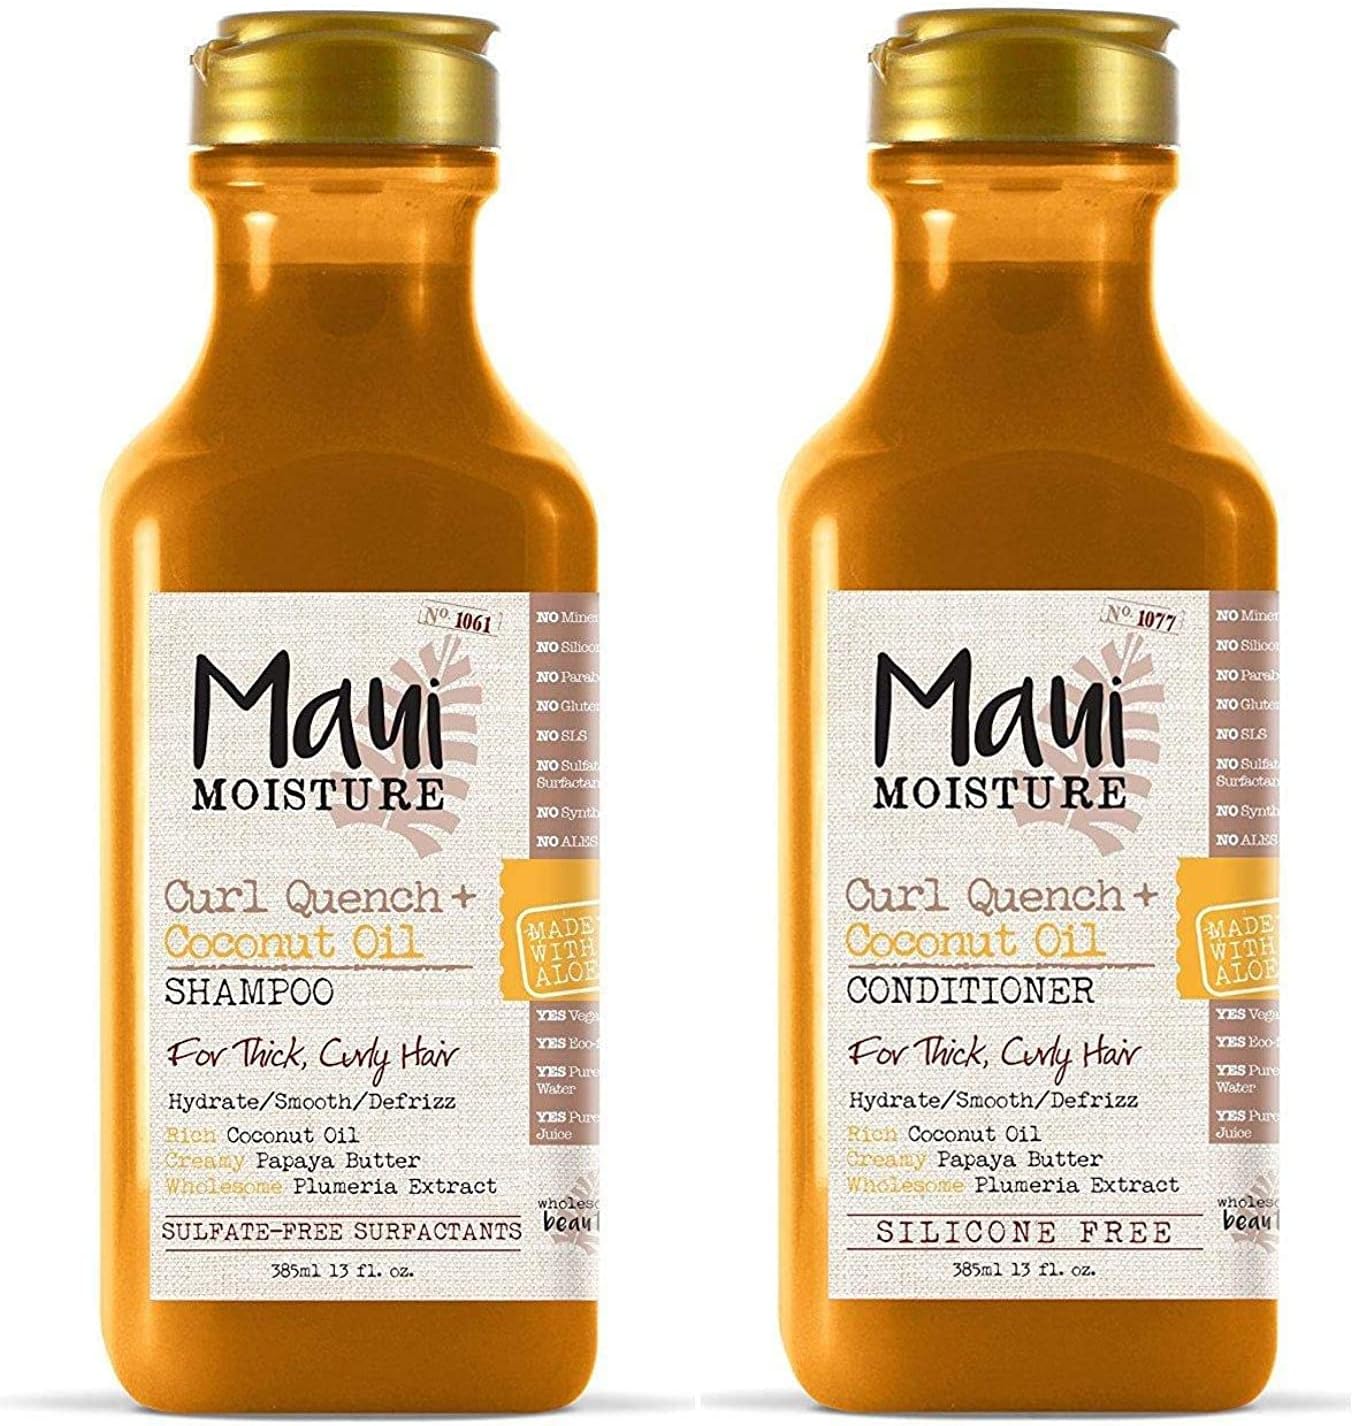 Maui Moisture Curl Quench plus Coconut Oil Shampoo and Conditioner 385ml each